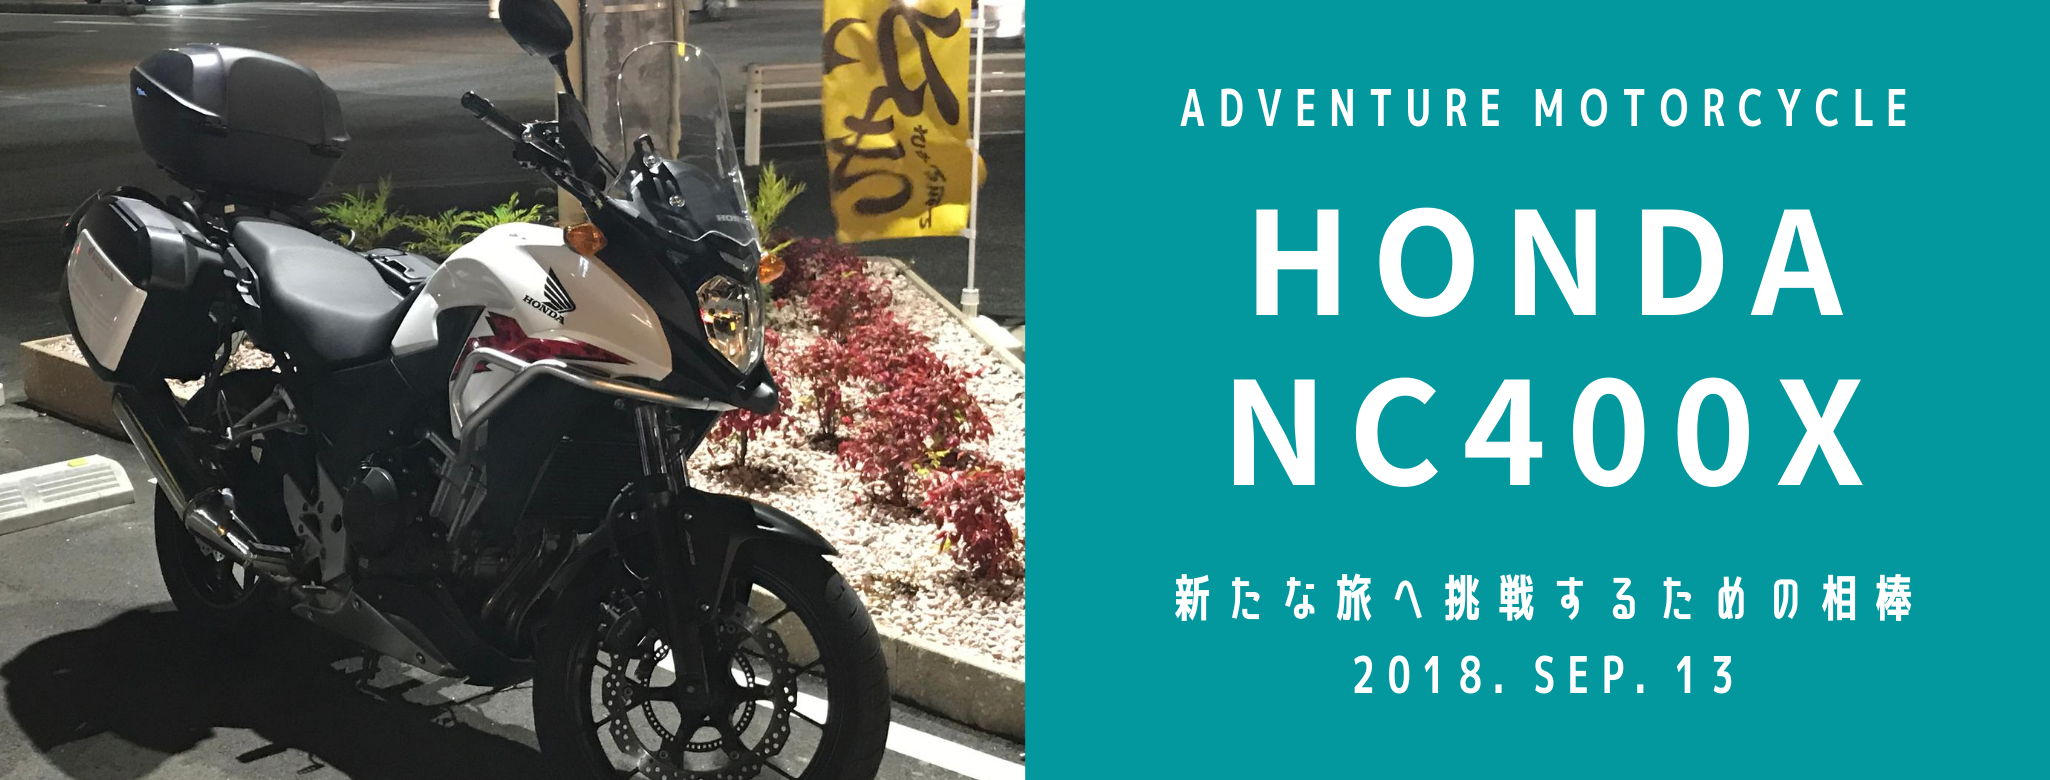 Adventure Motorcycle Honda 400x Sw 1とfly Fishingとcampとdiyを楽しむ